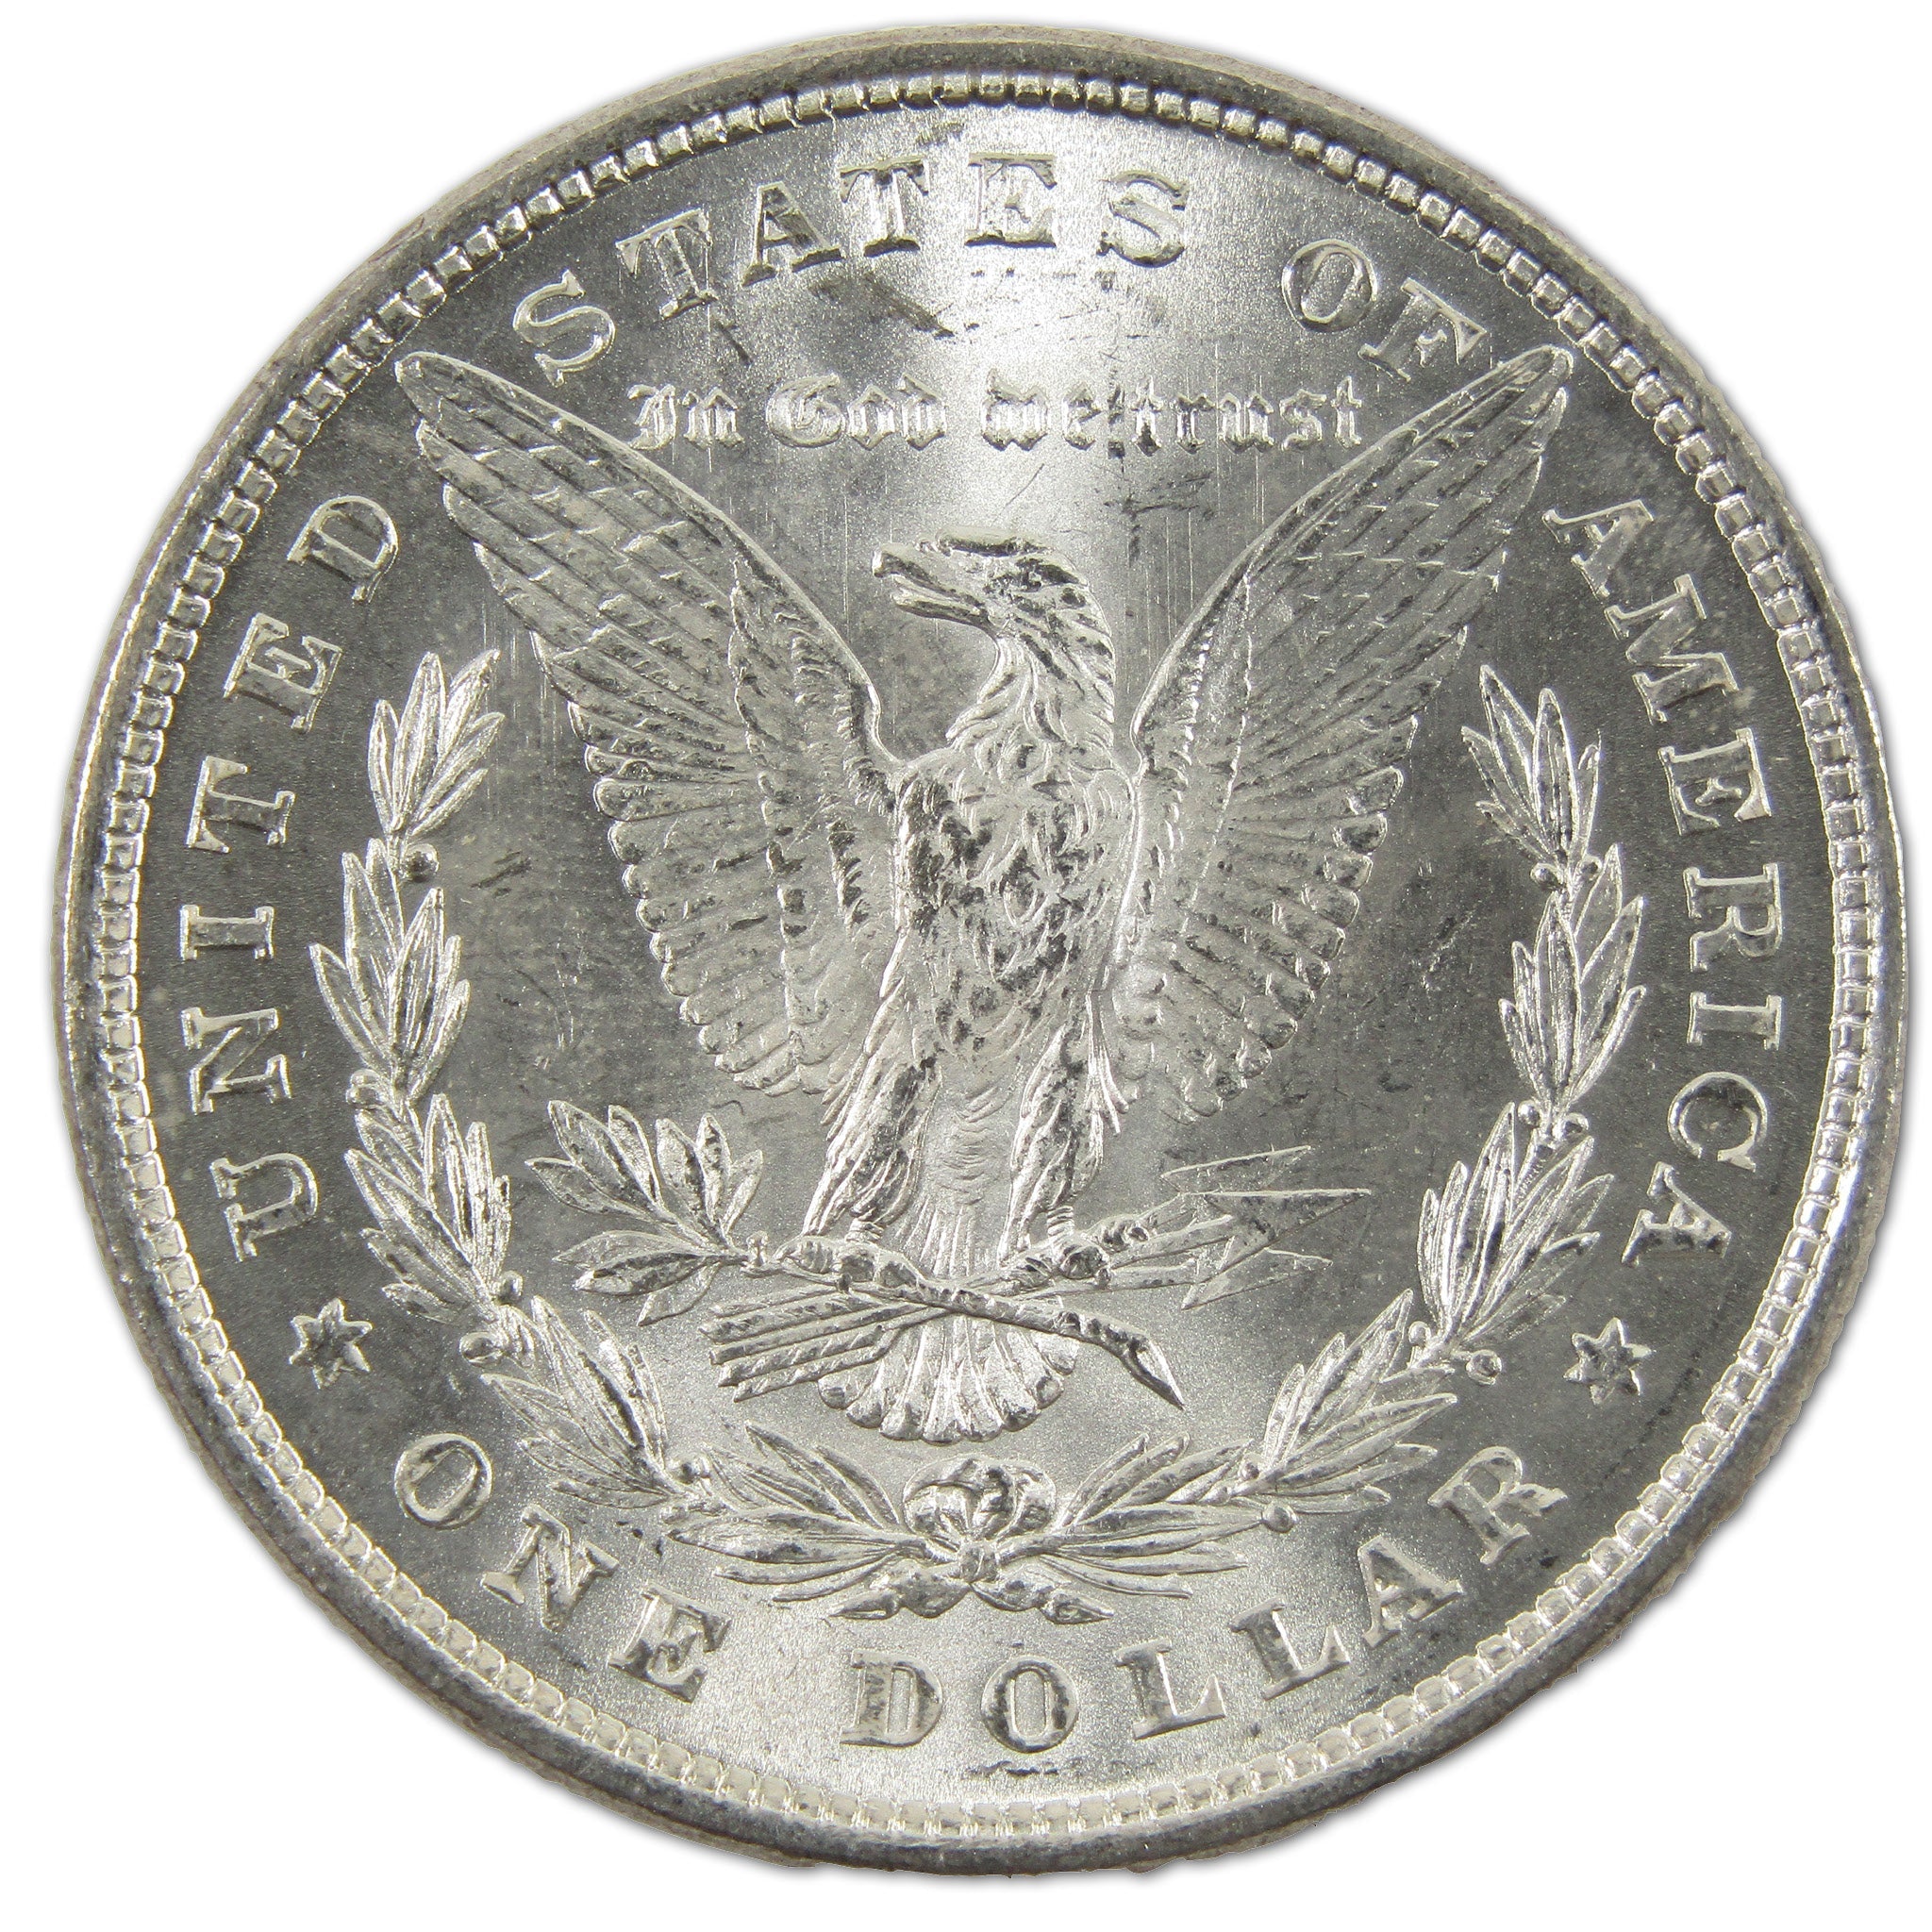 1878 8TF Morgan Dollar BU Uncirculated Silver $1 Coin SKU:I10755 - Morgan coin - Morgan silver dollar - Morgan silver dollar for sale - Profile Coins &amp; Collectibles